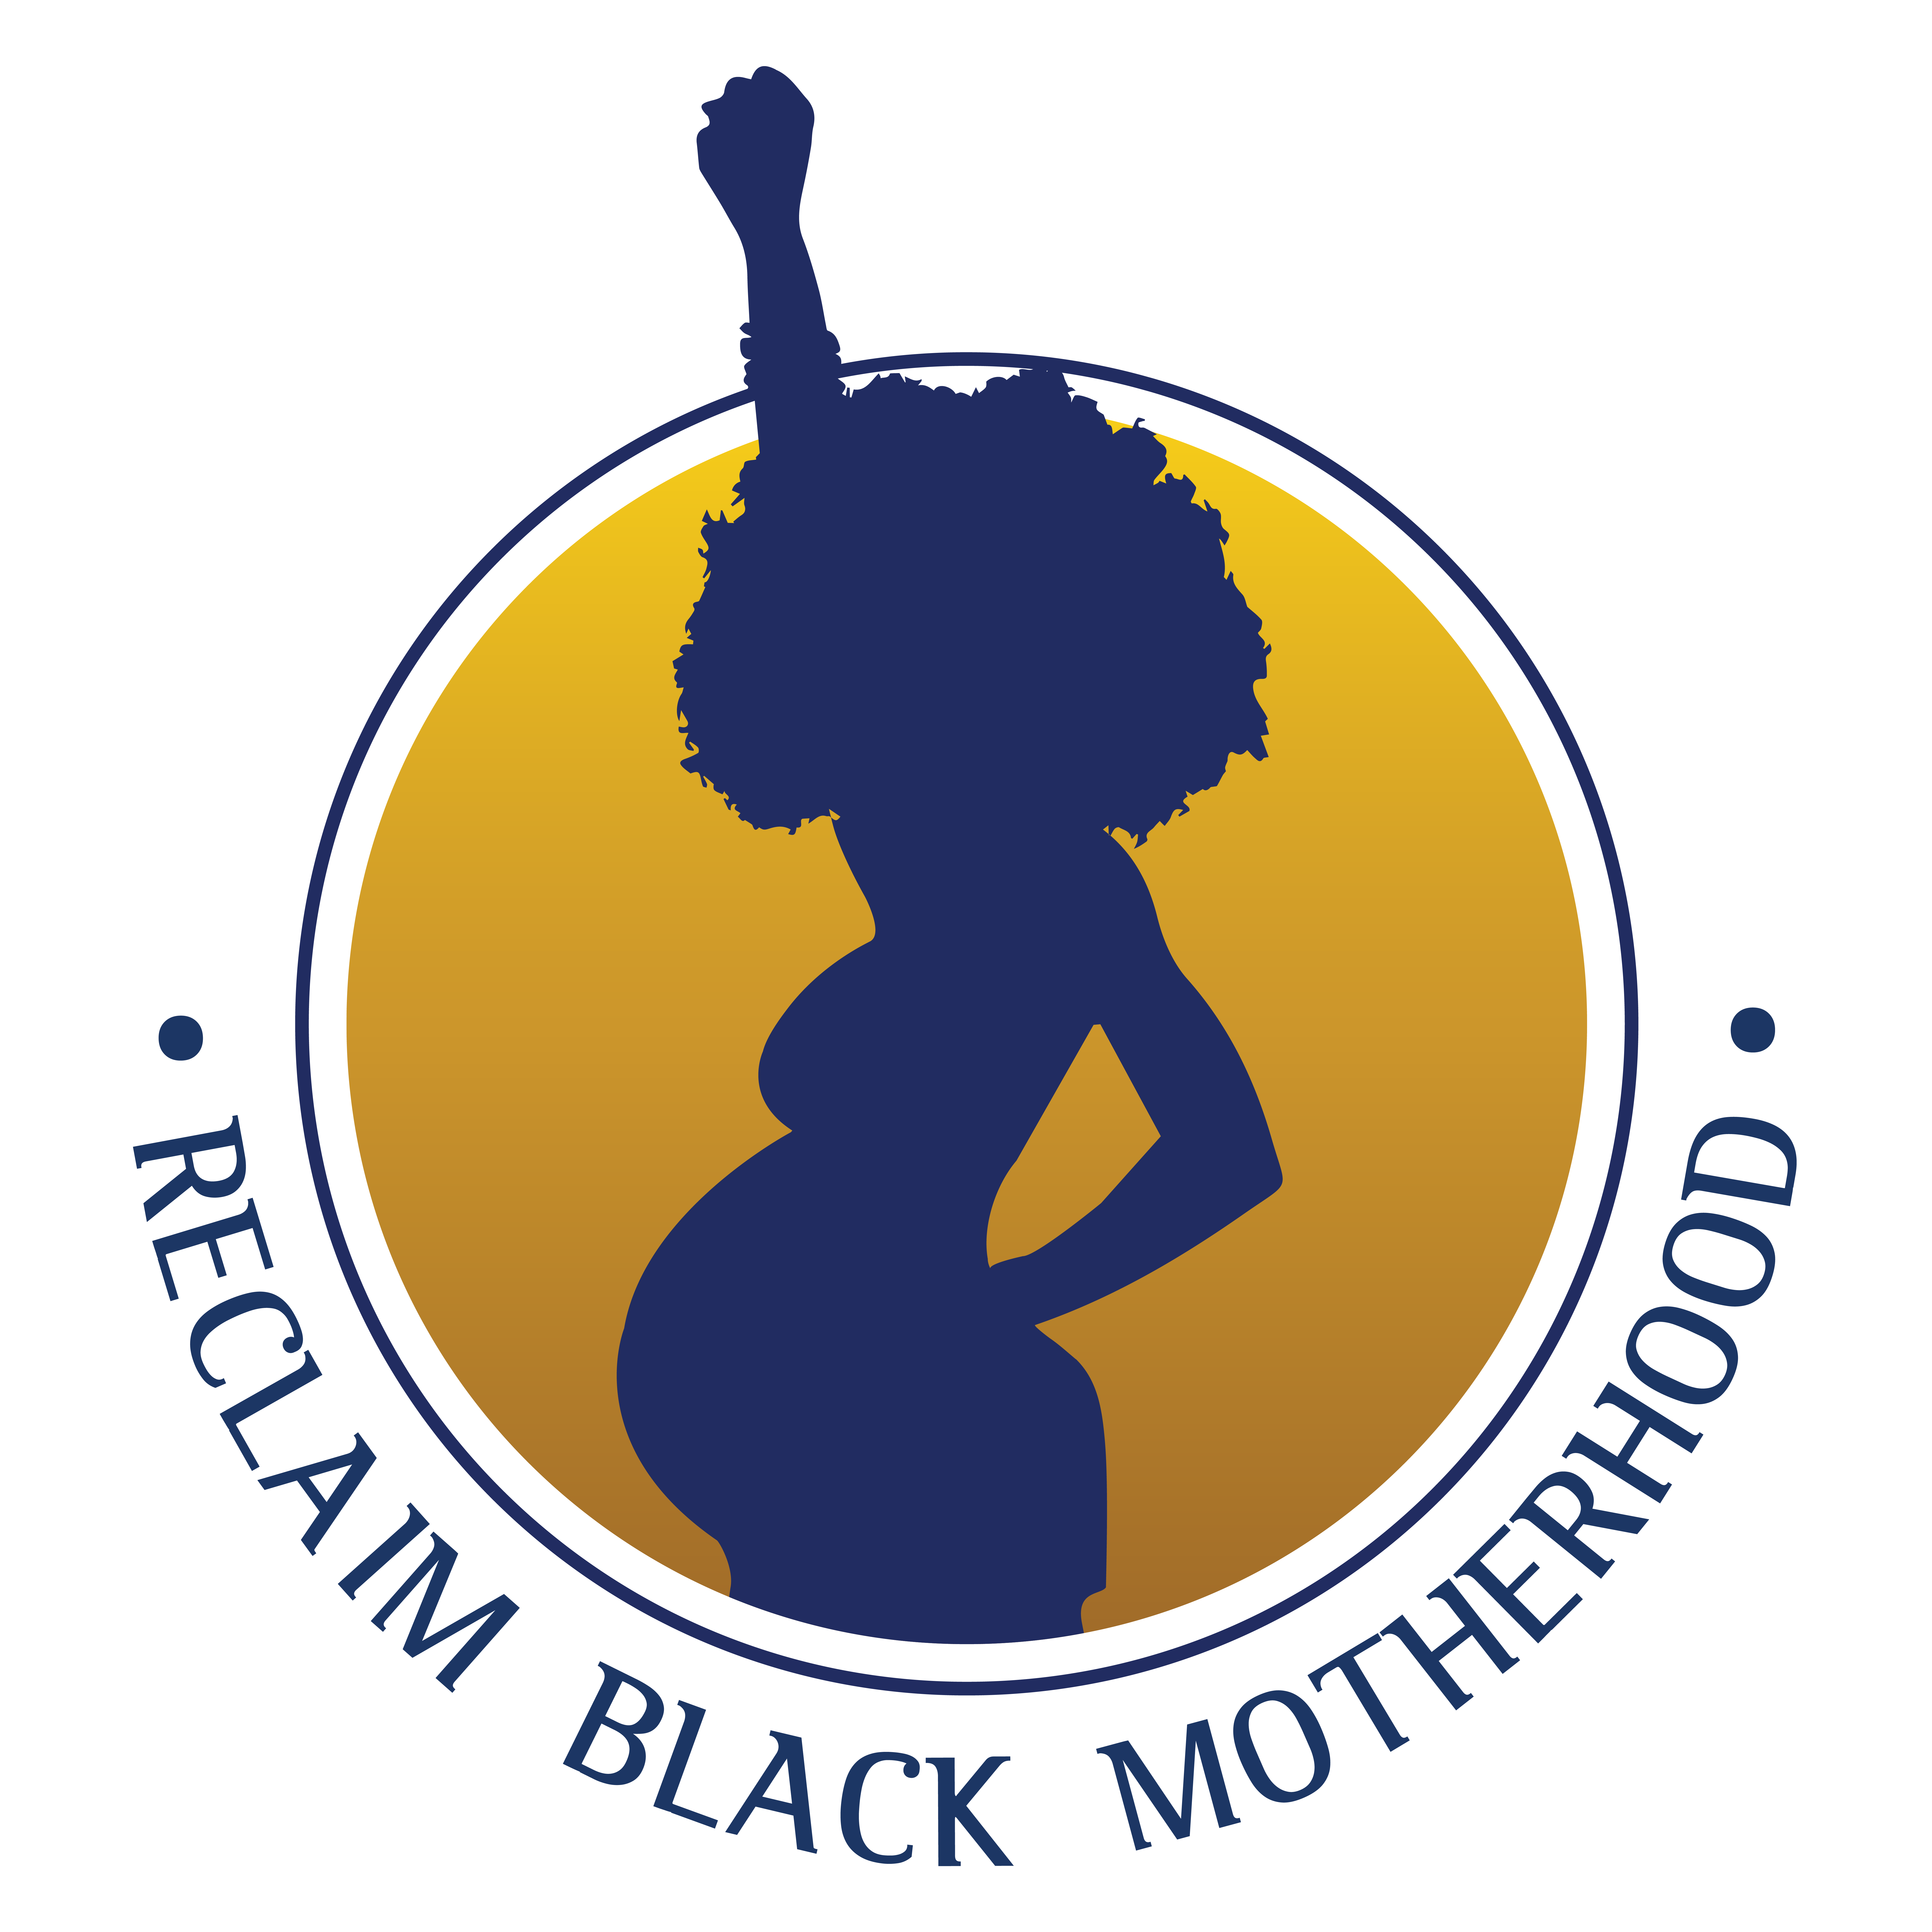 Reclaim_Black_Motherhood_RBM_logo.png (939 KB)